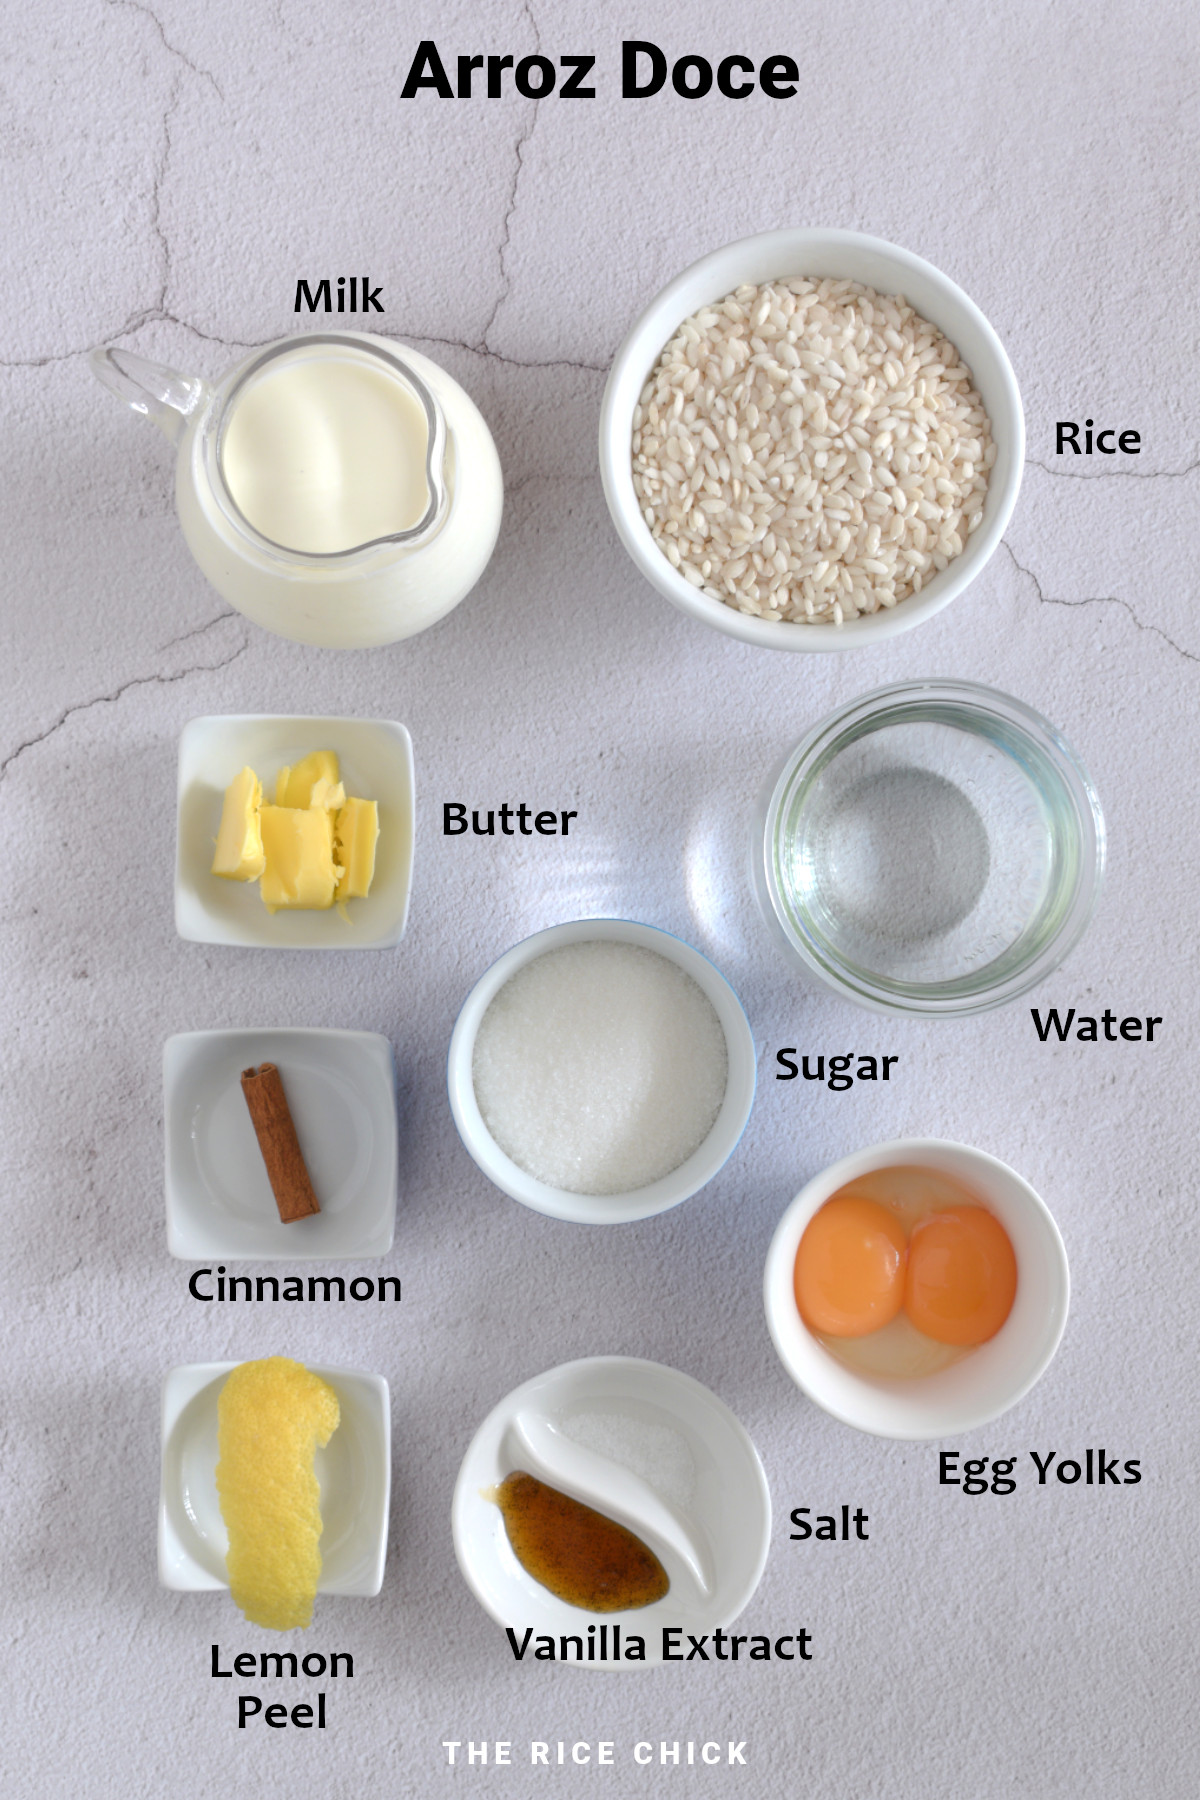 Ingredients for arroz doce.